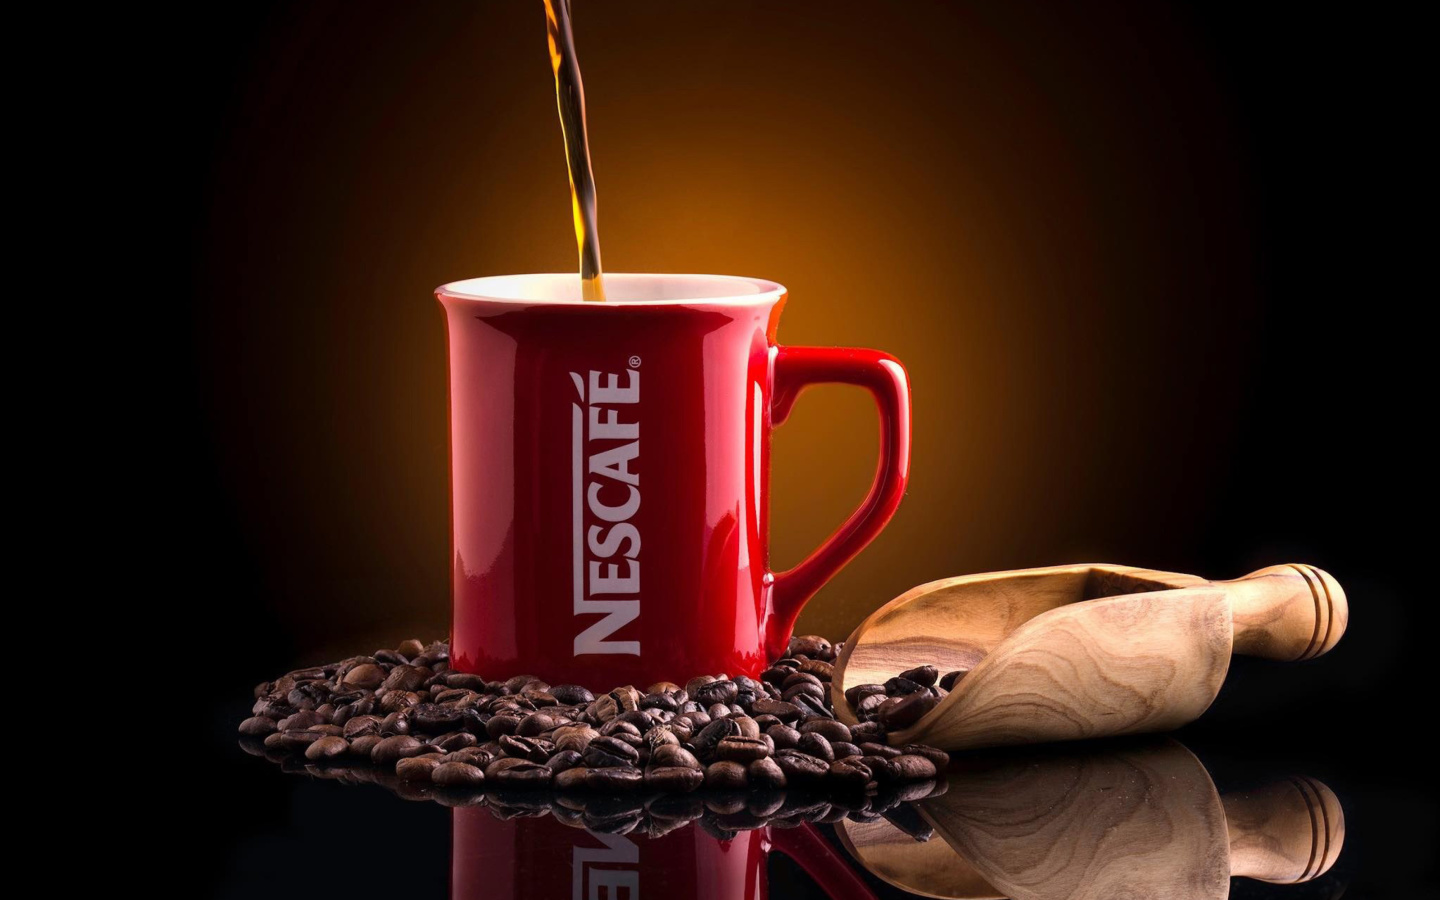 Das Nescafe Coffee Wallpaper 1440x900